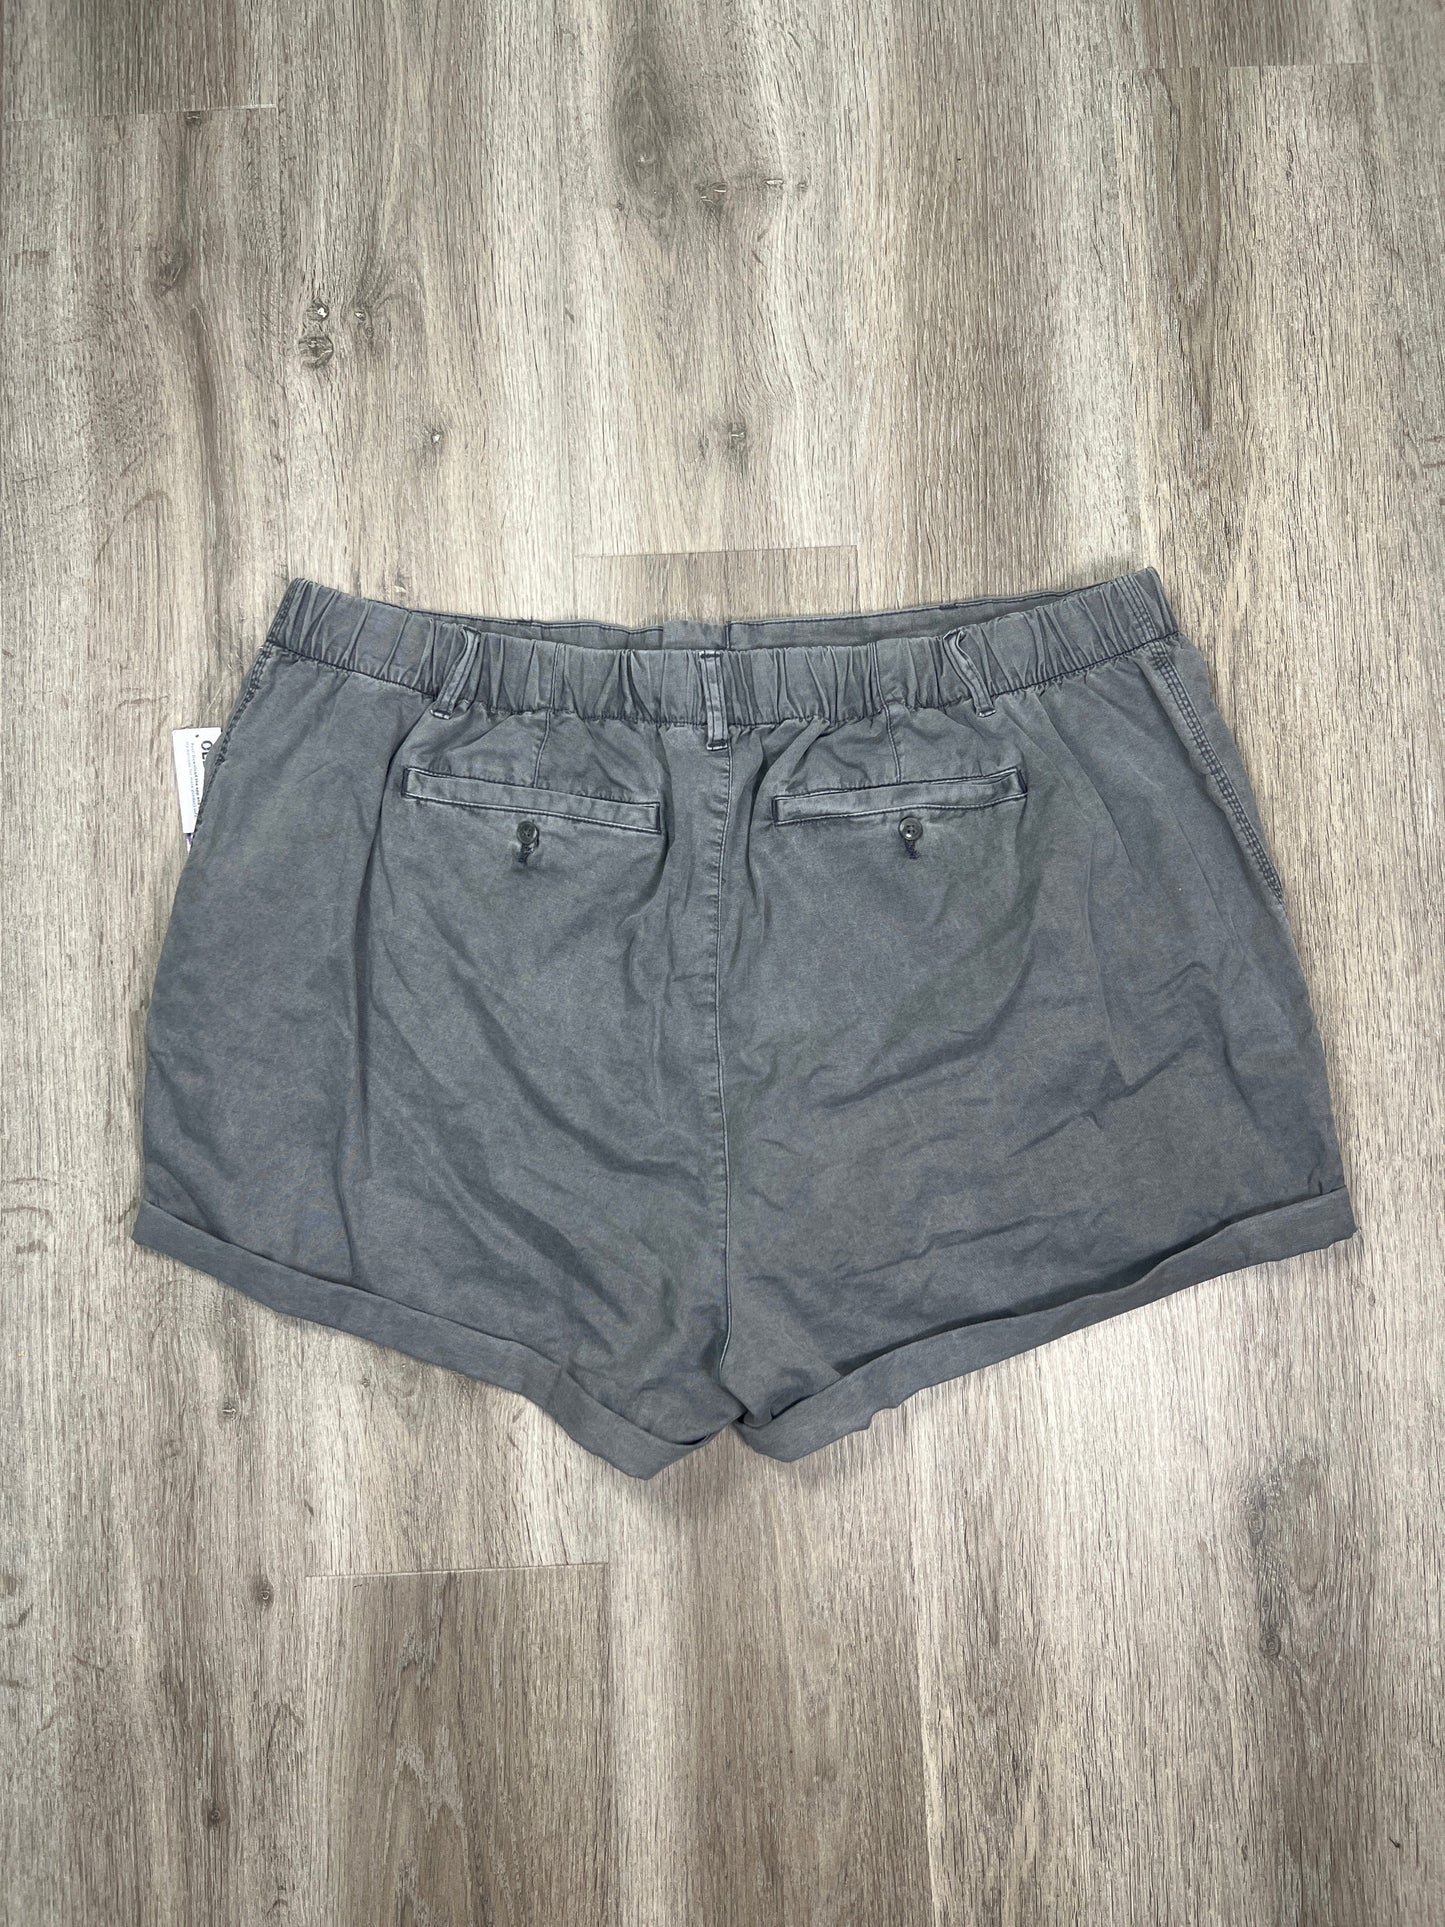 Grey Shorts Old Navy, Size 3x